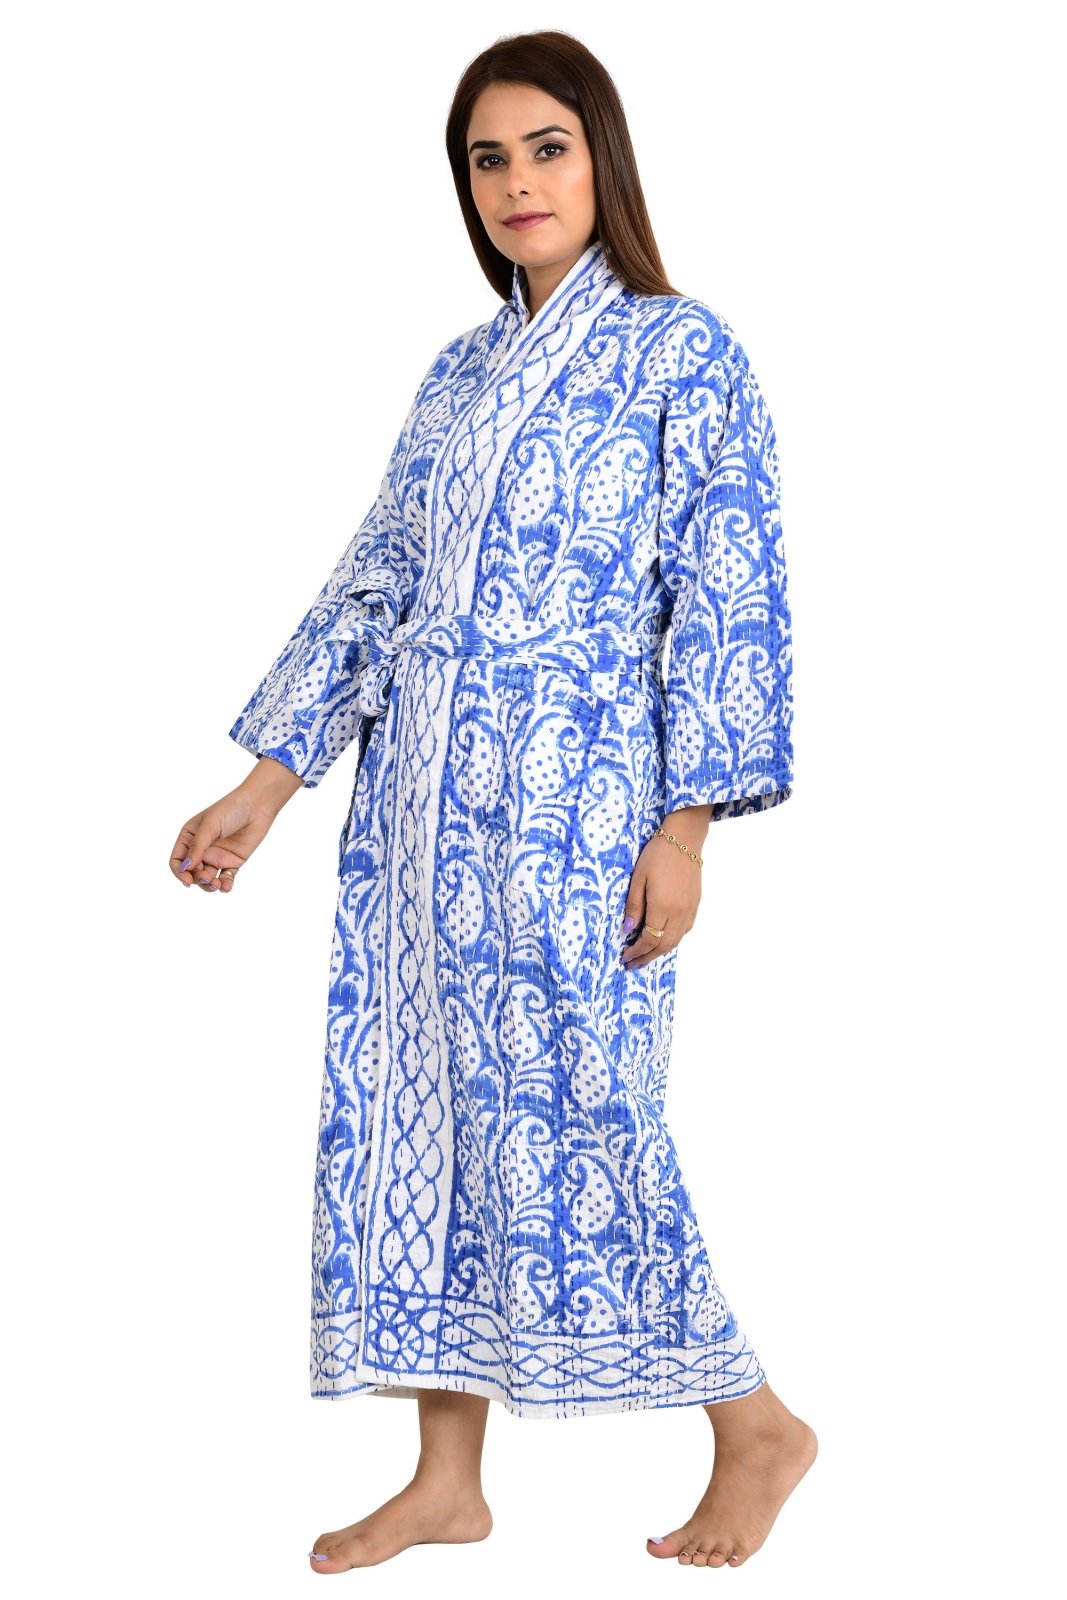 Kantha Stitch 100% Cotton Reversible Long Kimono Women Jacket | Handmade Stitch Robe | Unisex Gift | White Blue Leaf Print - The Eastern Loom